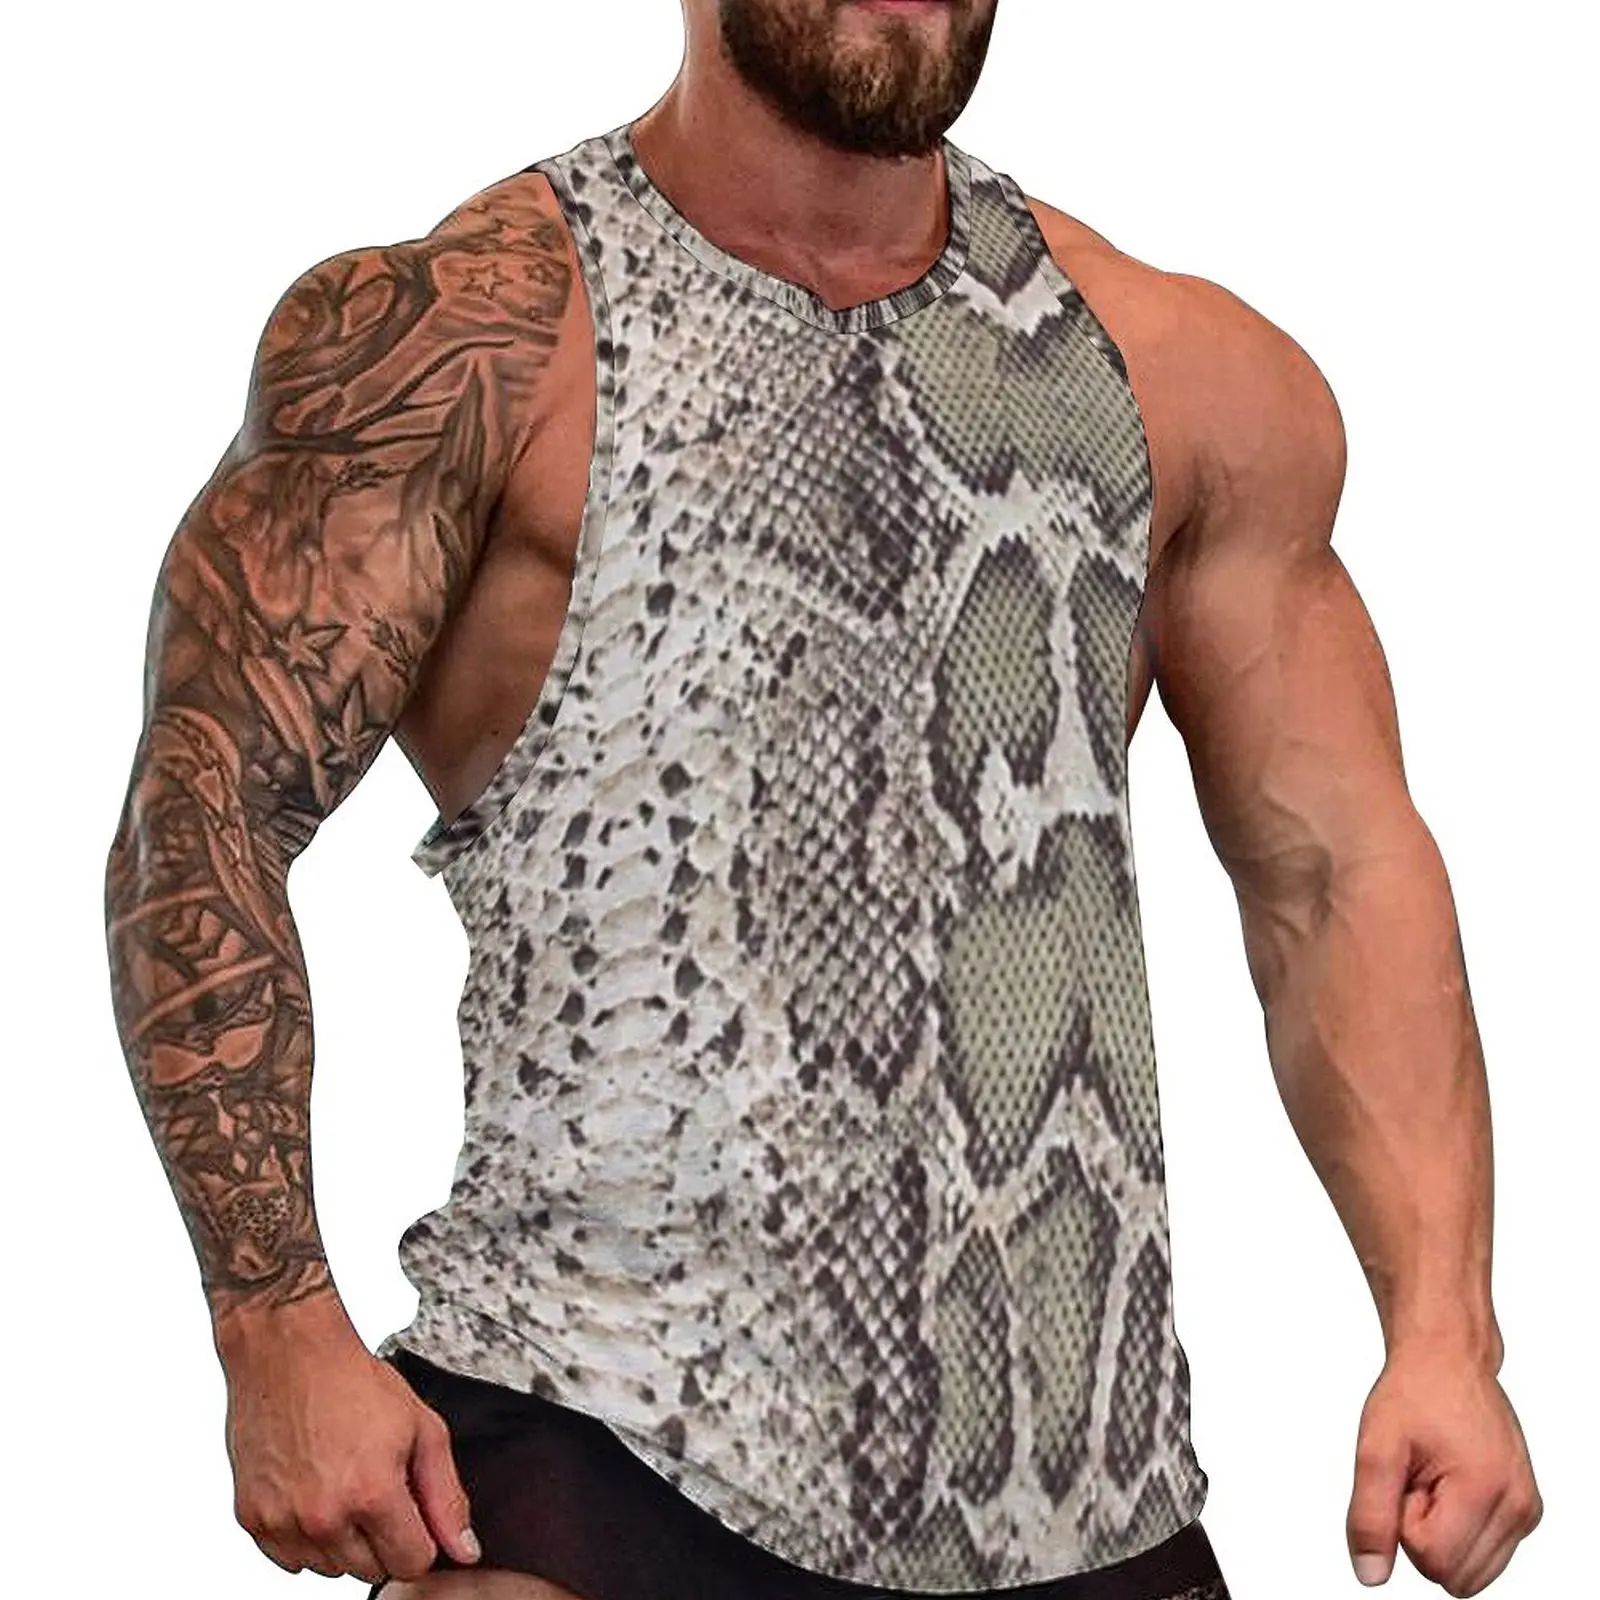 

Snakeskin Print Summer Tank Top Animal Skin Training Tops Man Graphic Streetwear Sleeveless Vests Big Size 4XL 5XL